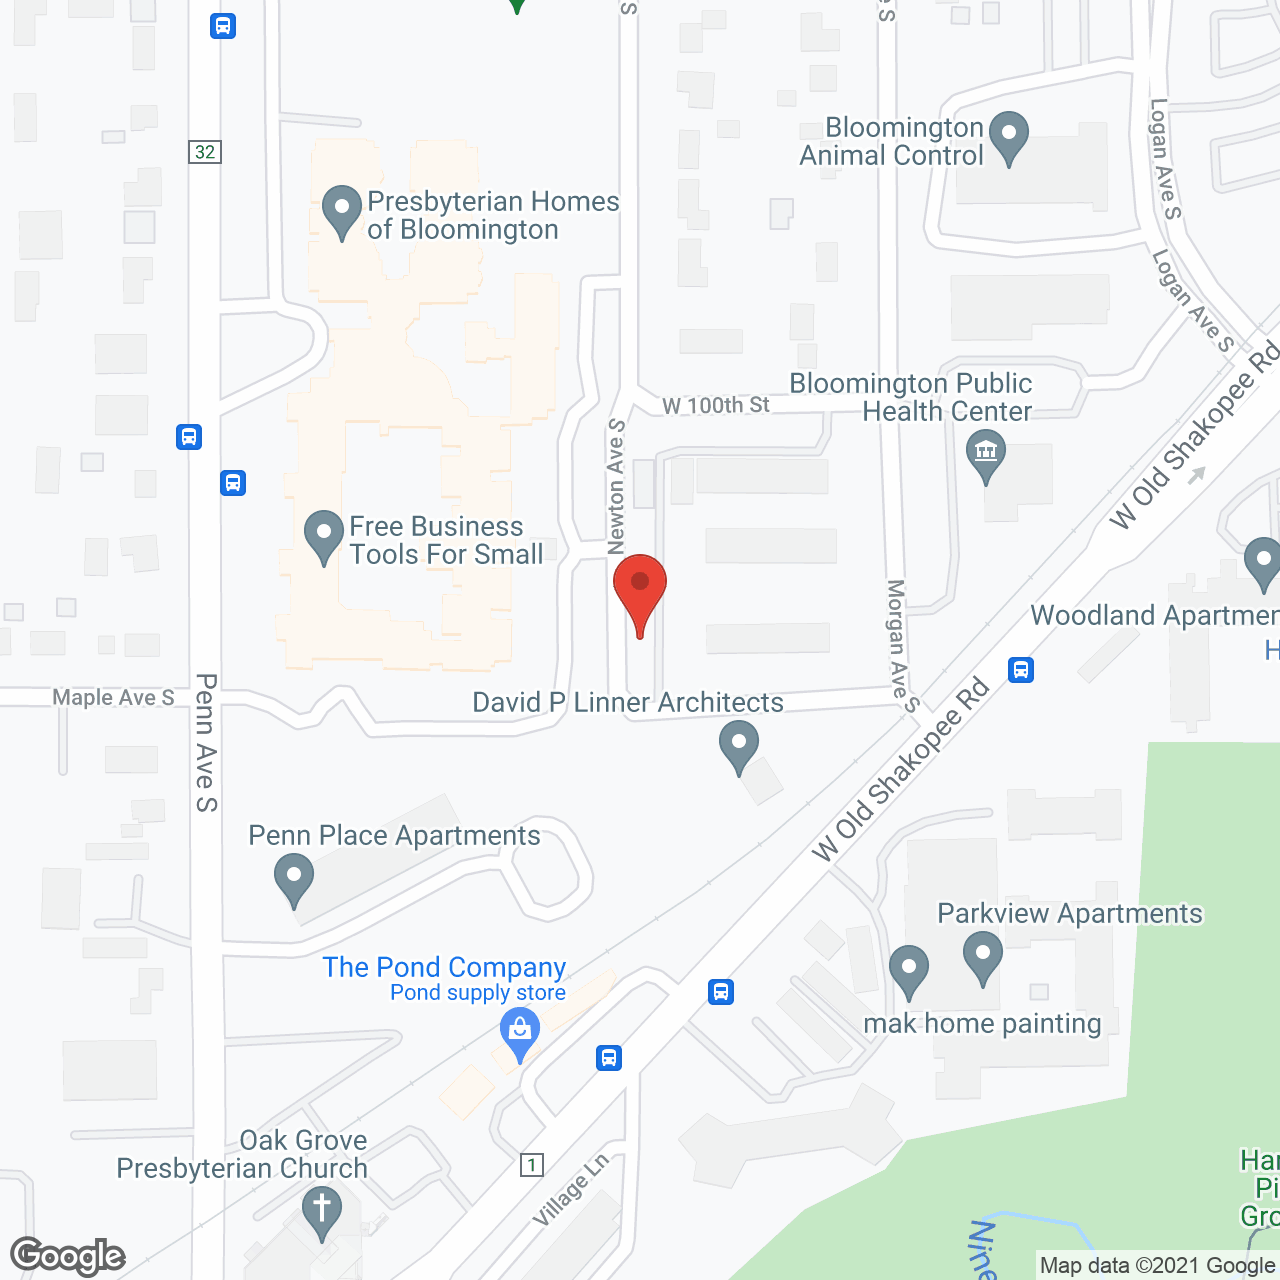 Presbyterian Homes of Bloomington in google map